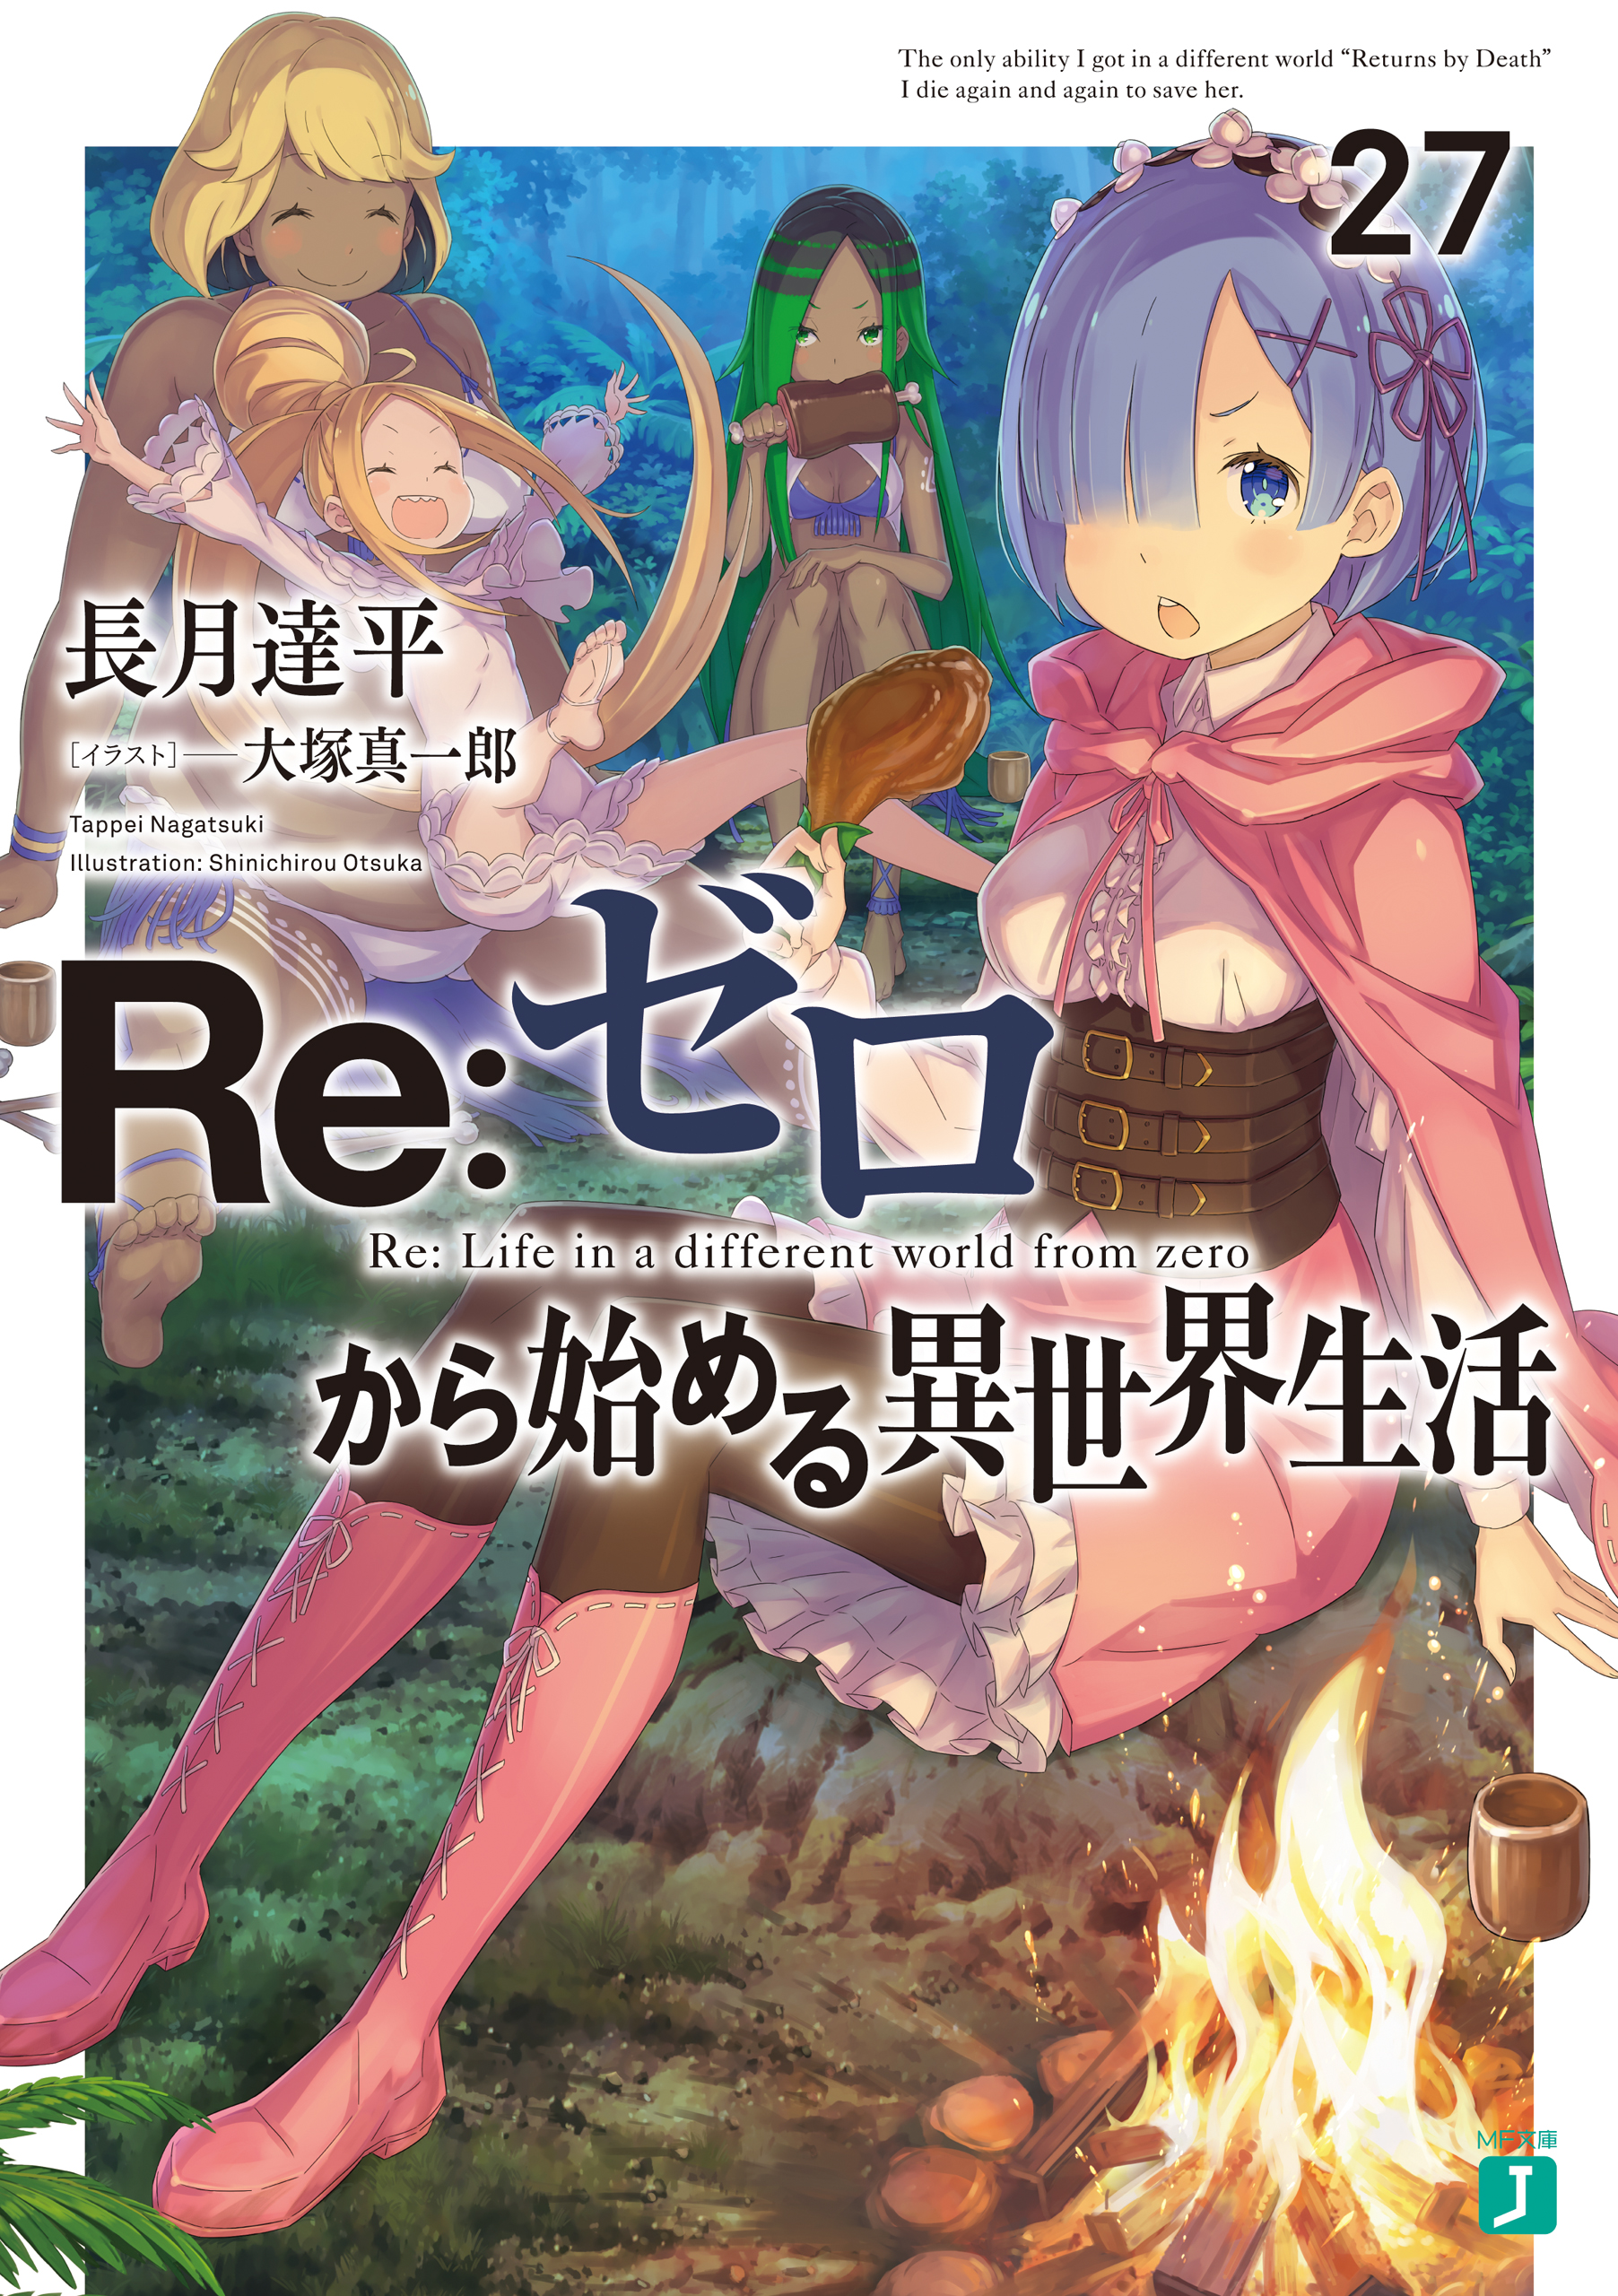 Re:Zero Light Novel 27 | Re:Zero Wiki |